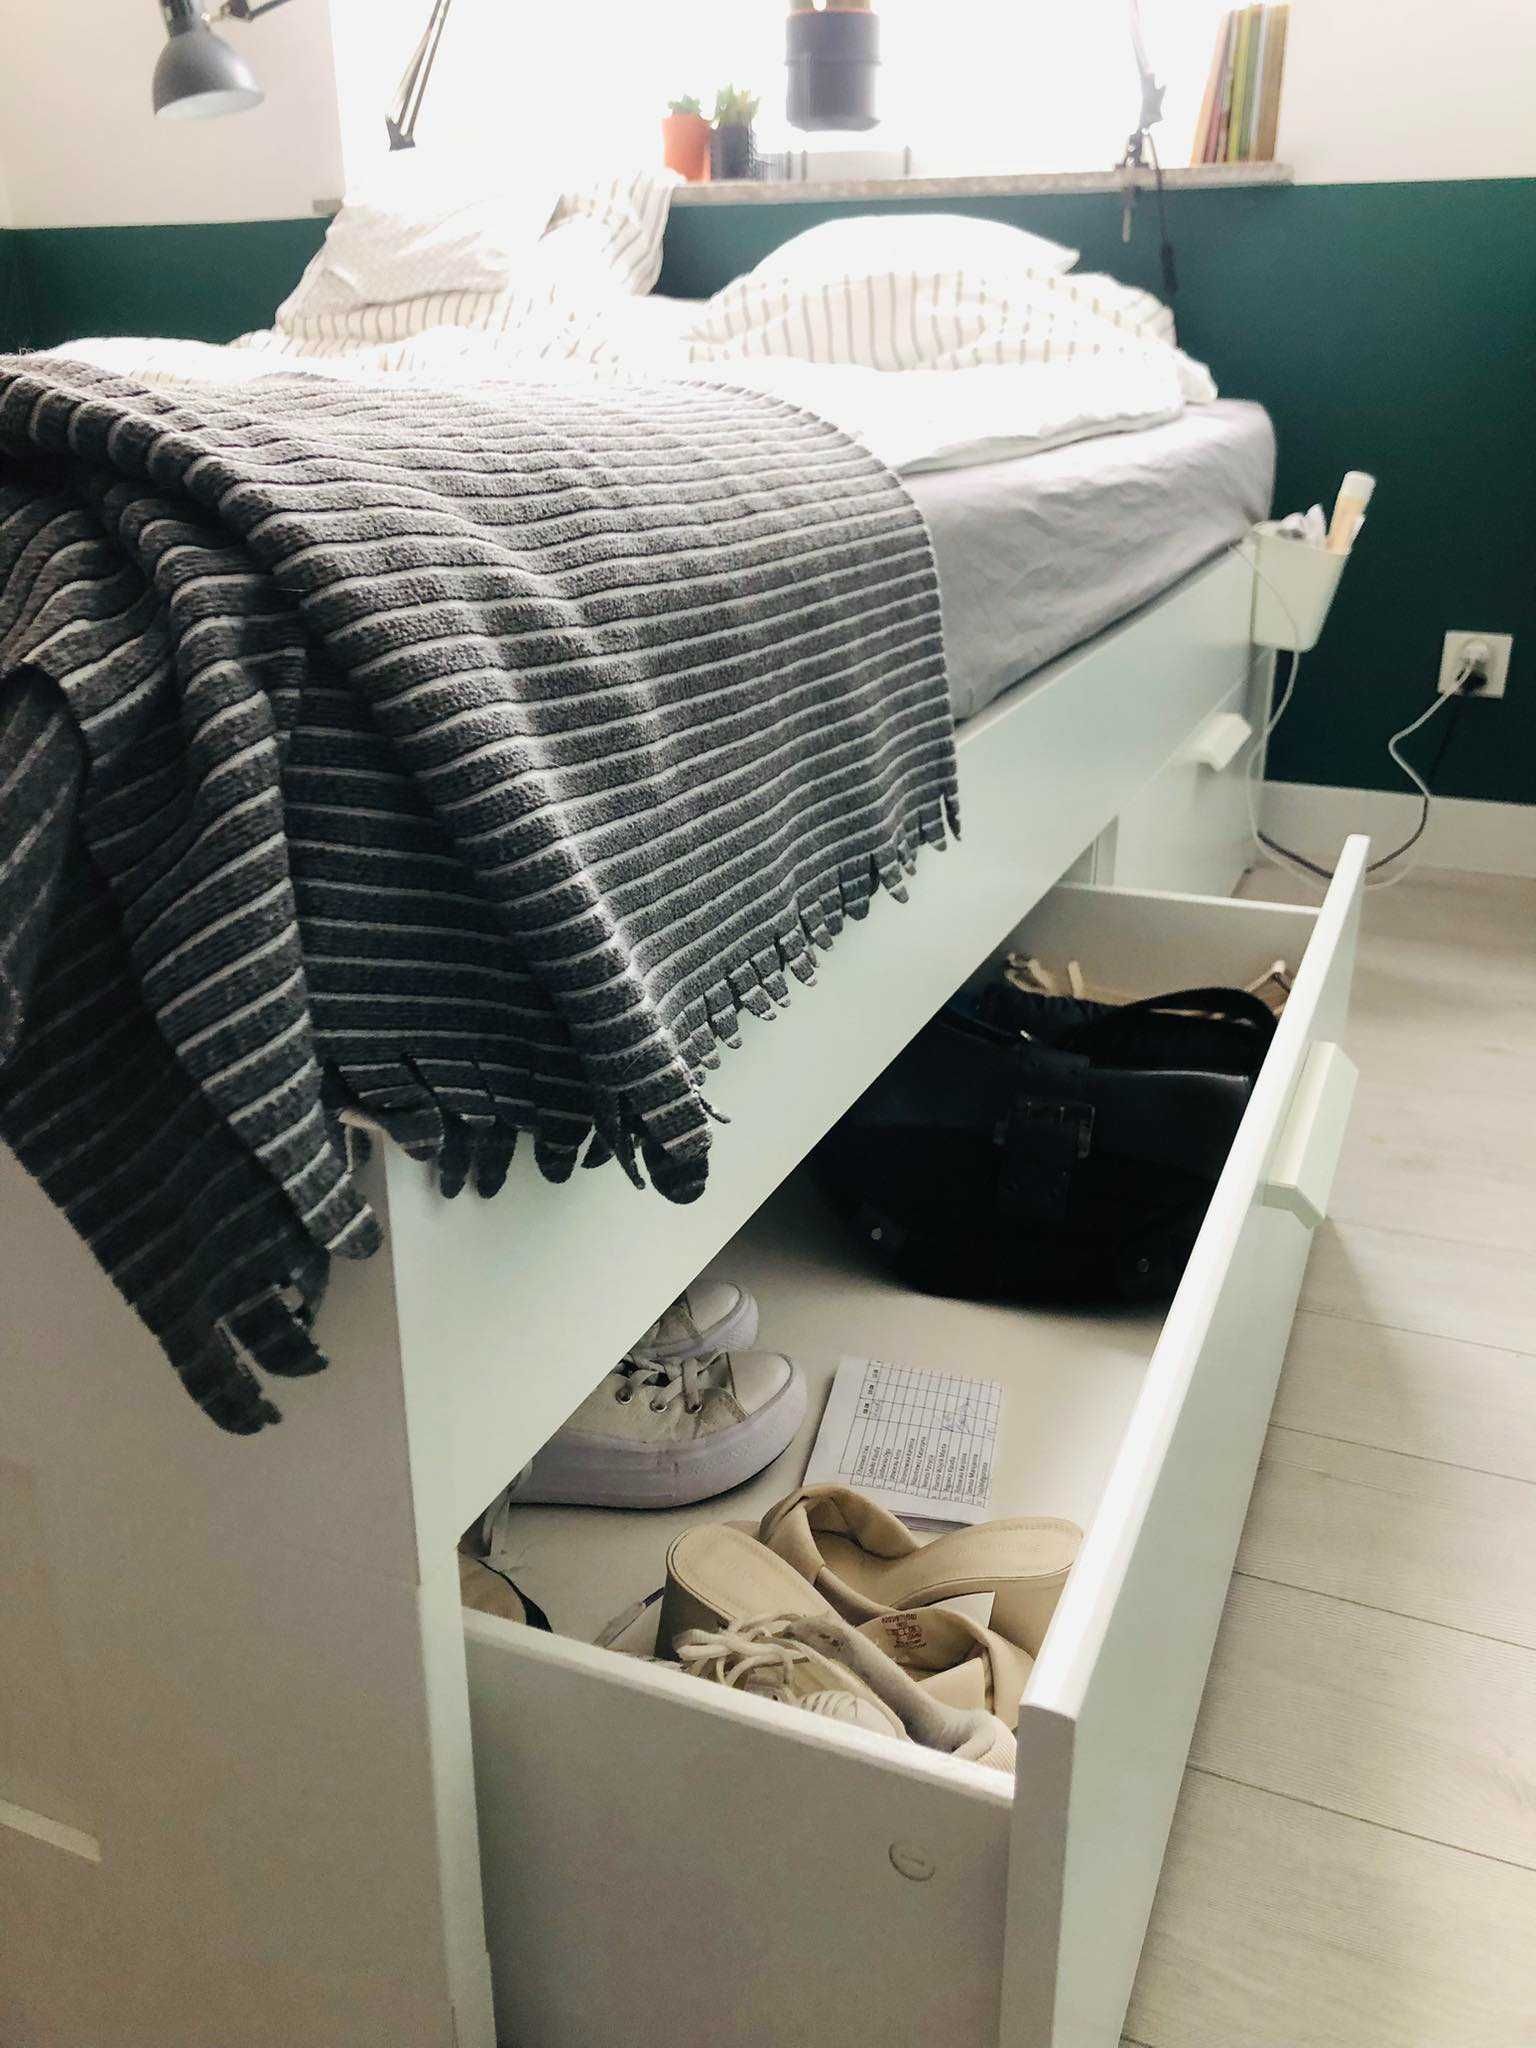 łóżko BRIMNES IKEA + dno LINDBÅDEN 160x200 cm